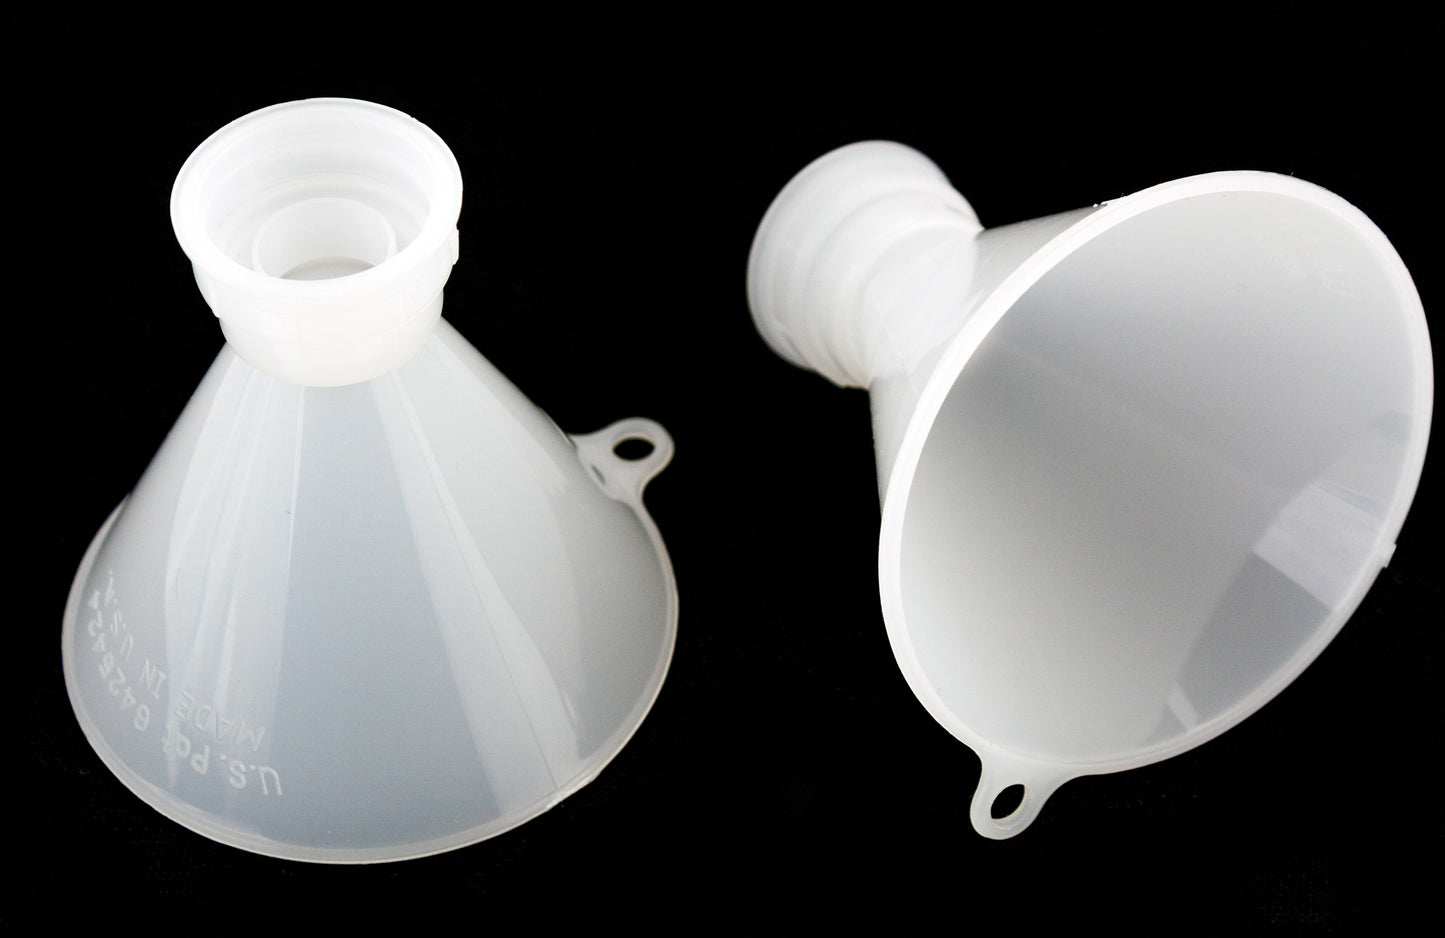 16 oz. Plastic Shampoo, Conditioner, Wash Refillable Shower Bottles (any color) PLUS 2 Twist-on Funnels Bundle